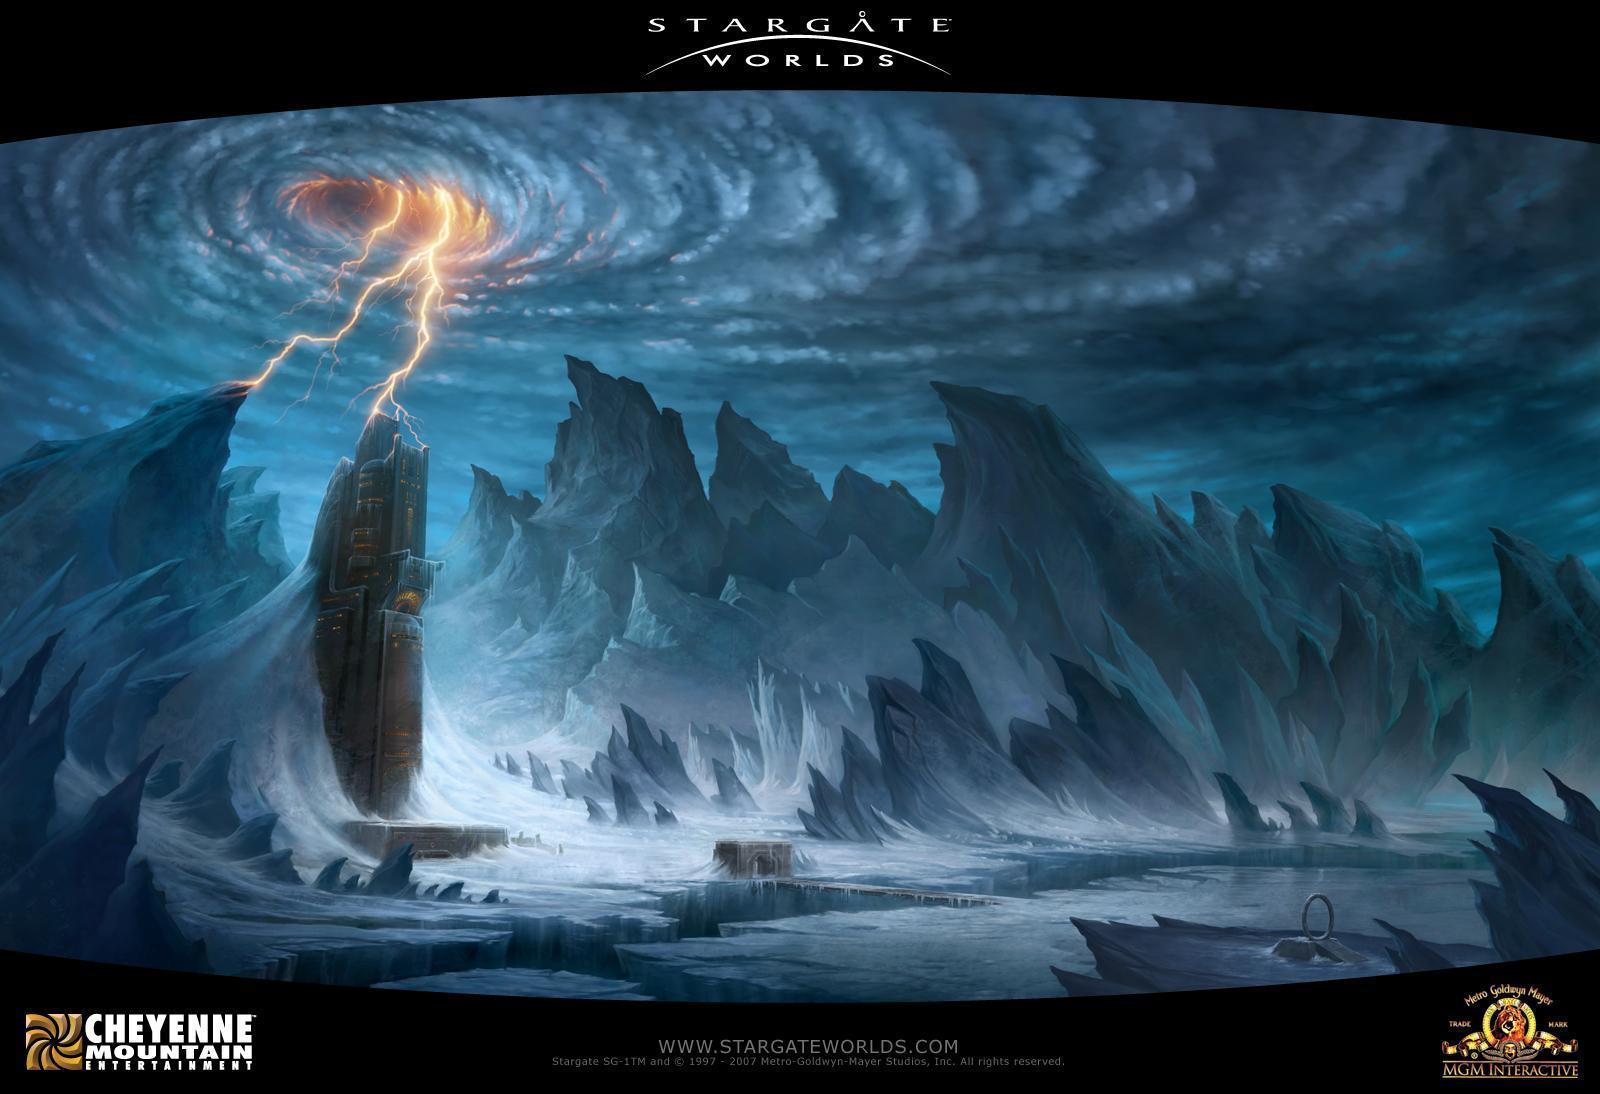 Stargate Worlds #21